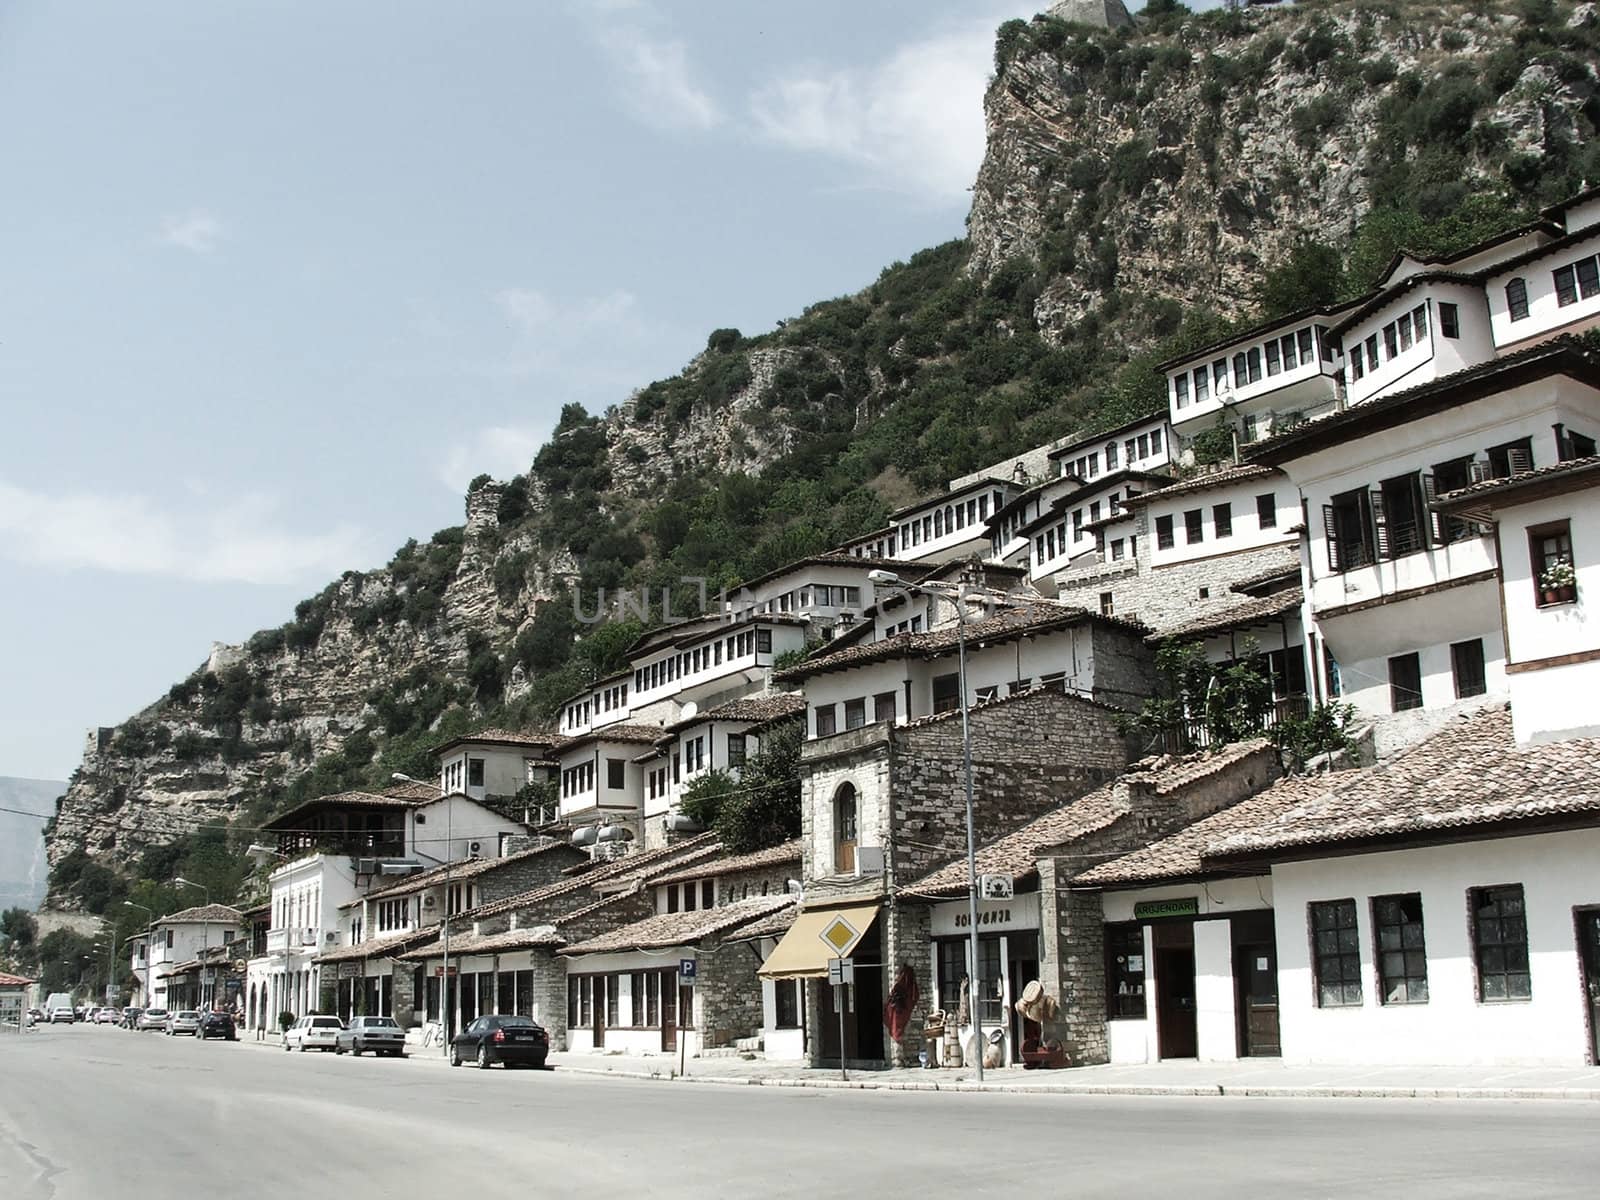 Berat Albania by artelis